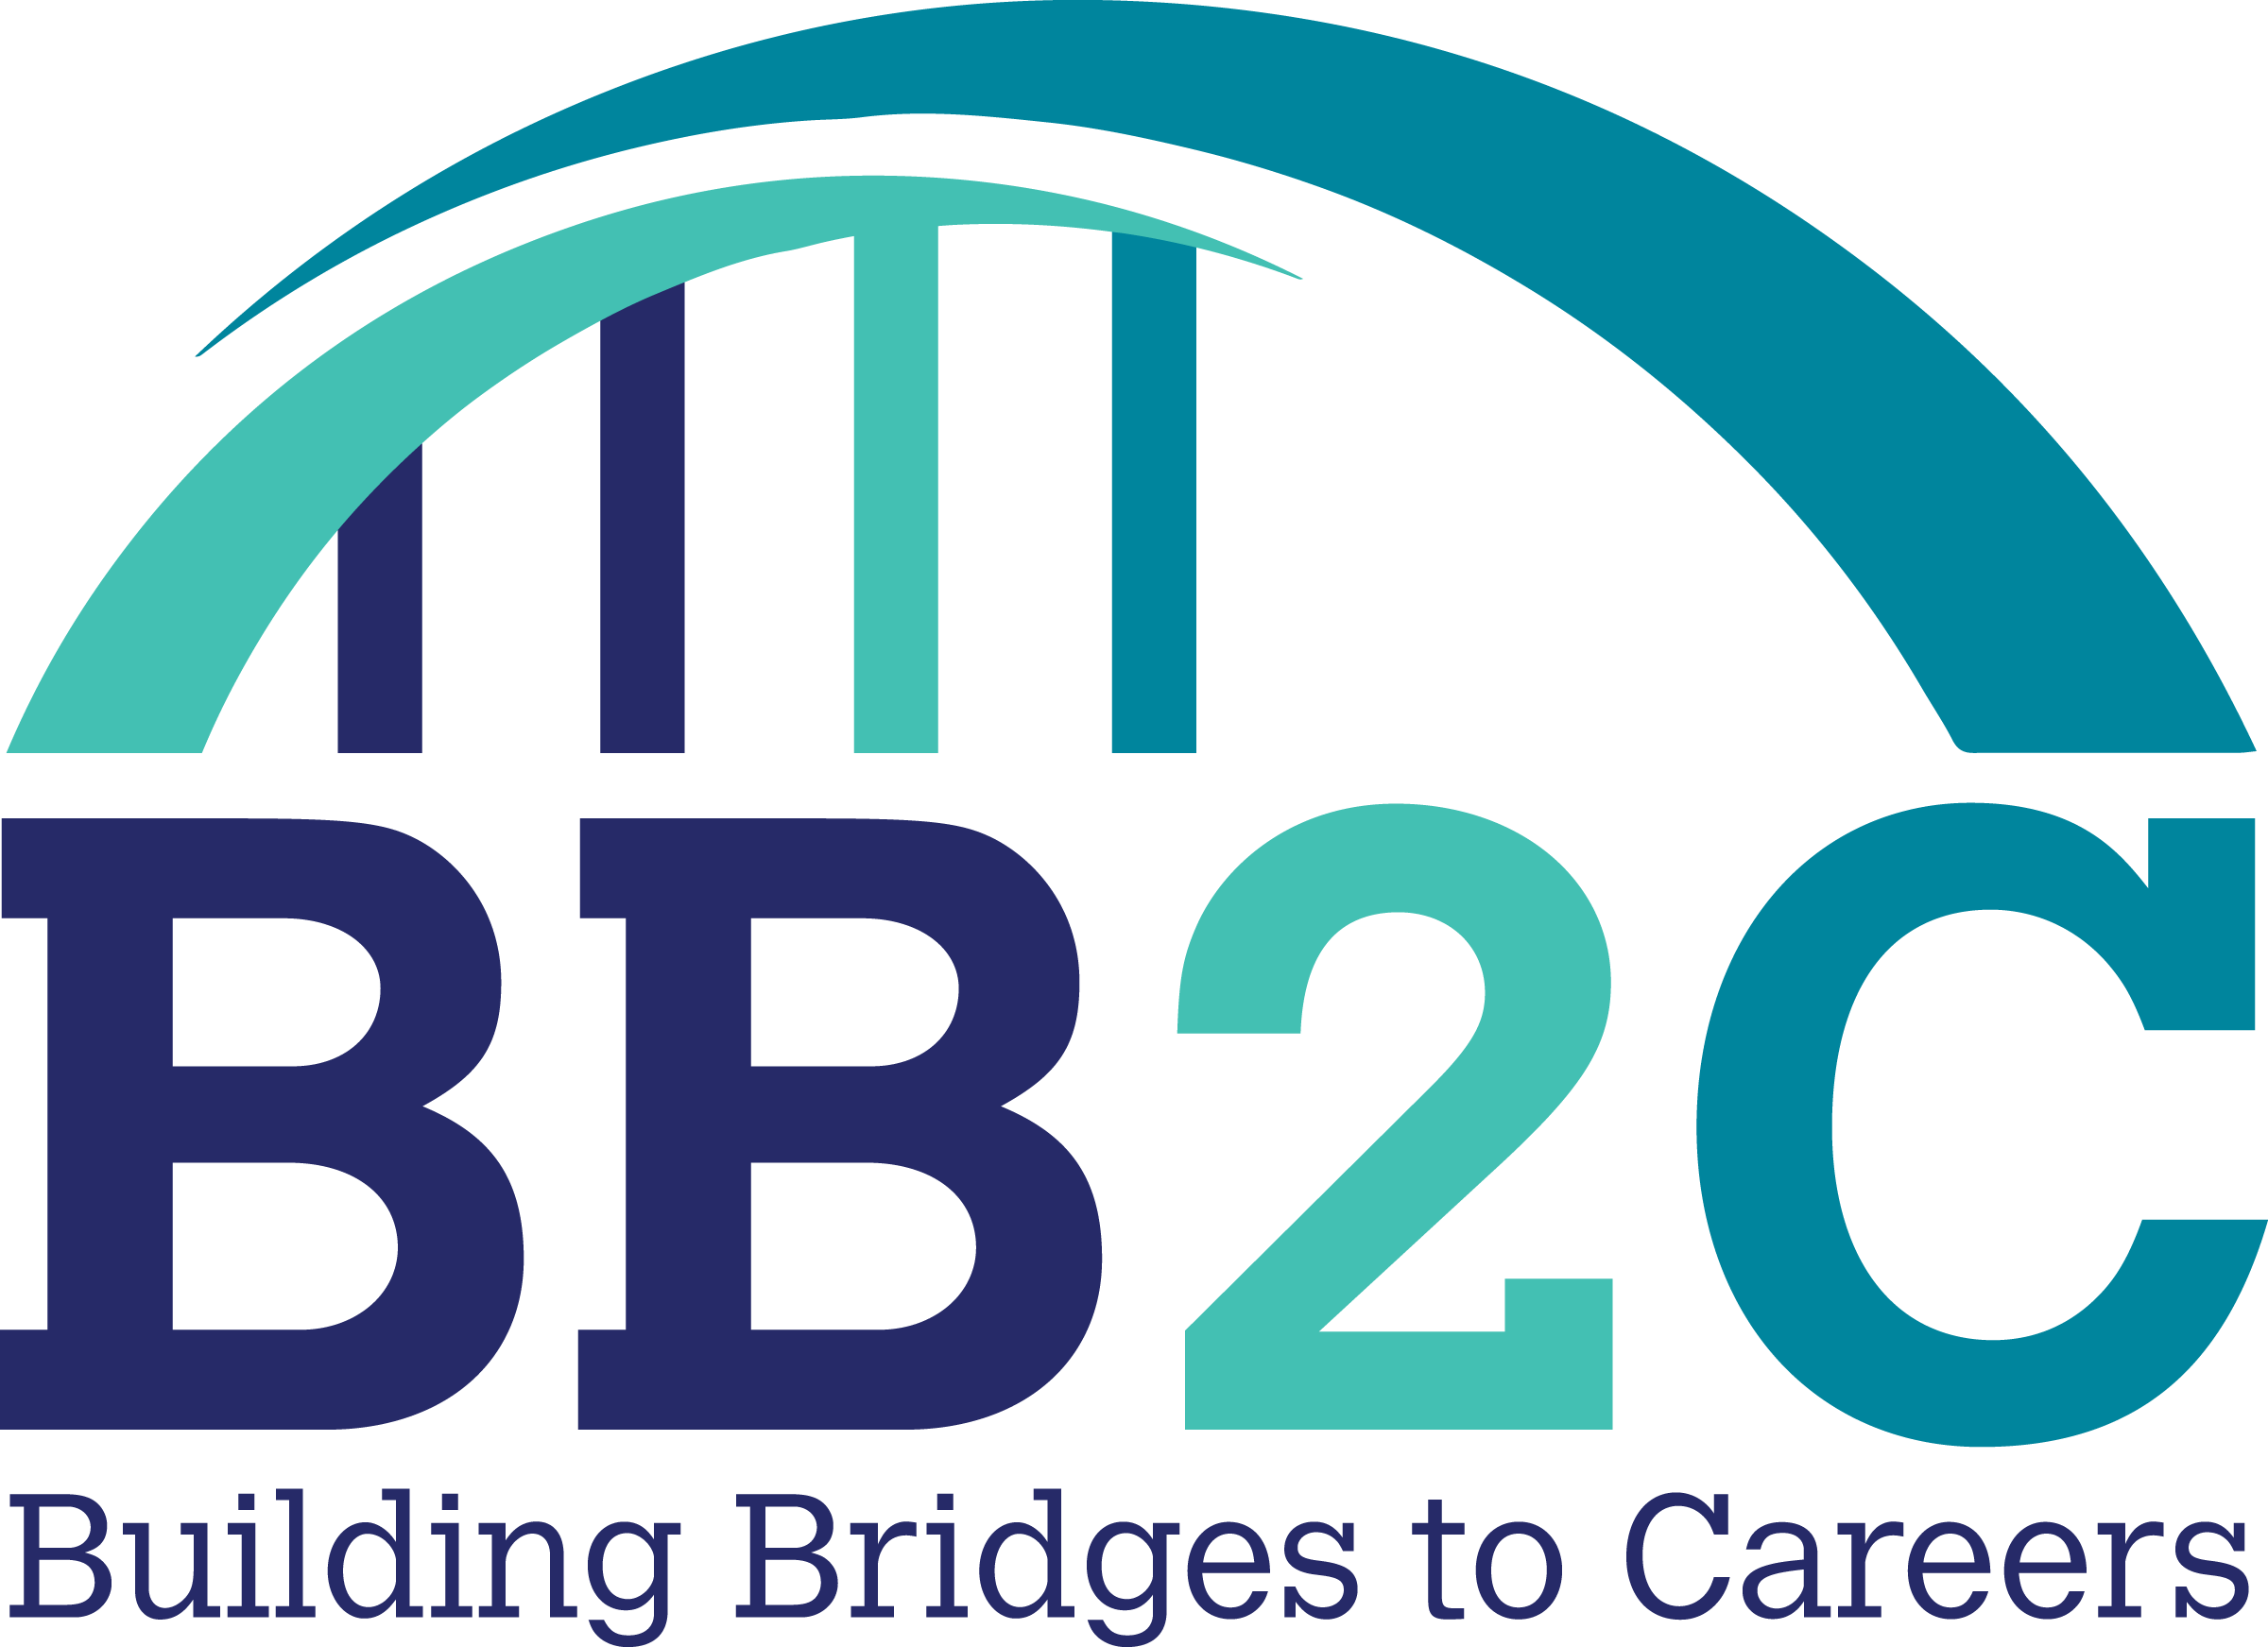 Building Bridges 2 Careers